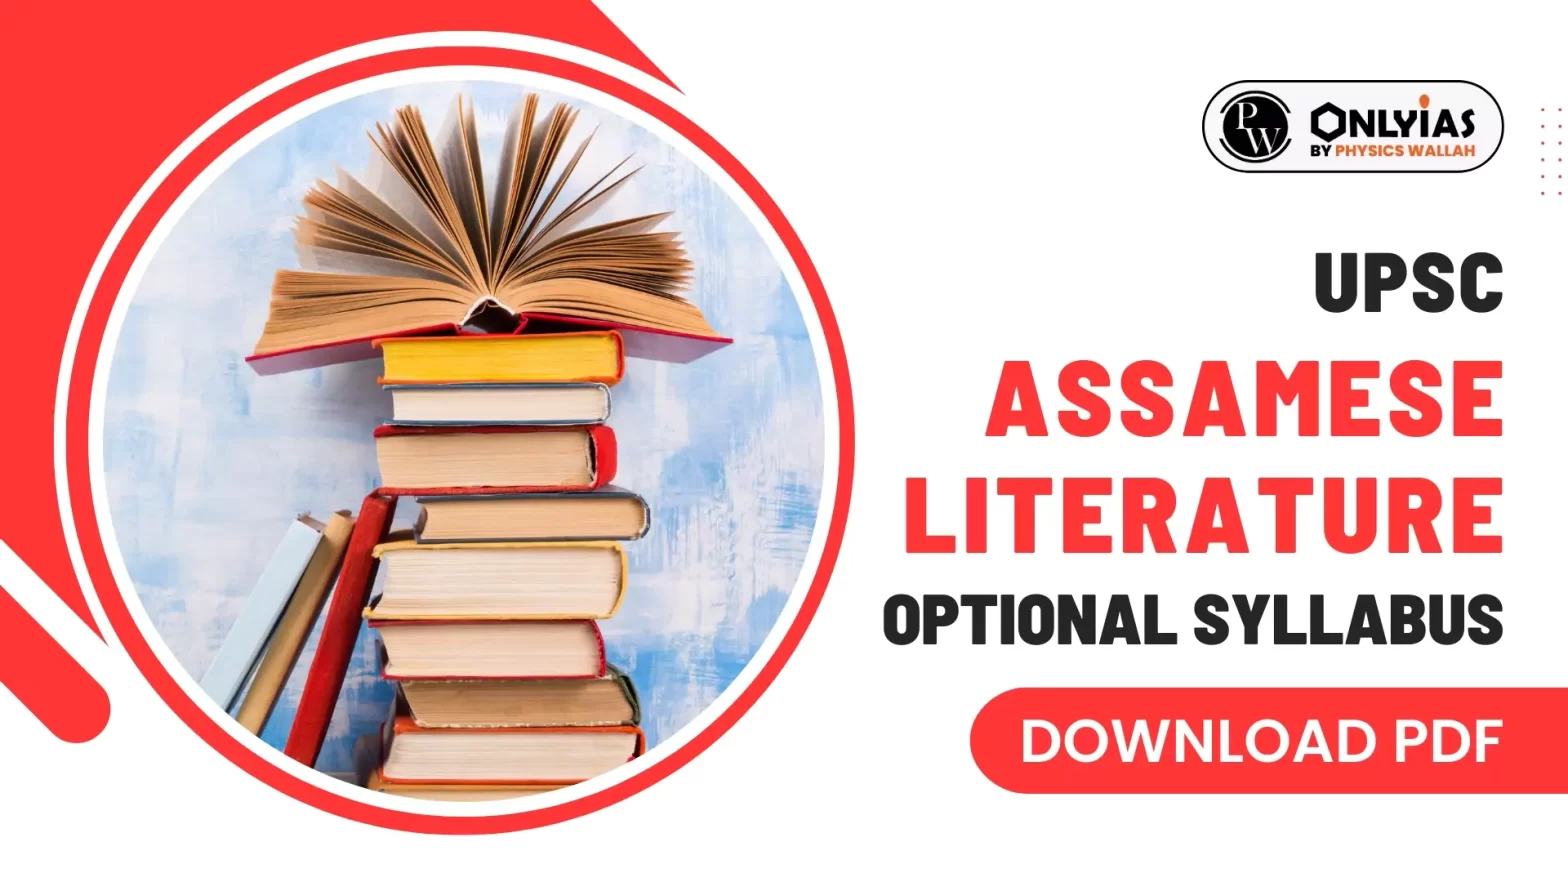 UPSC Assamese Literature Optional Syllabus, Download PDF